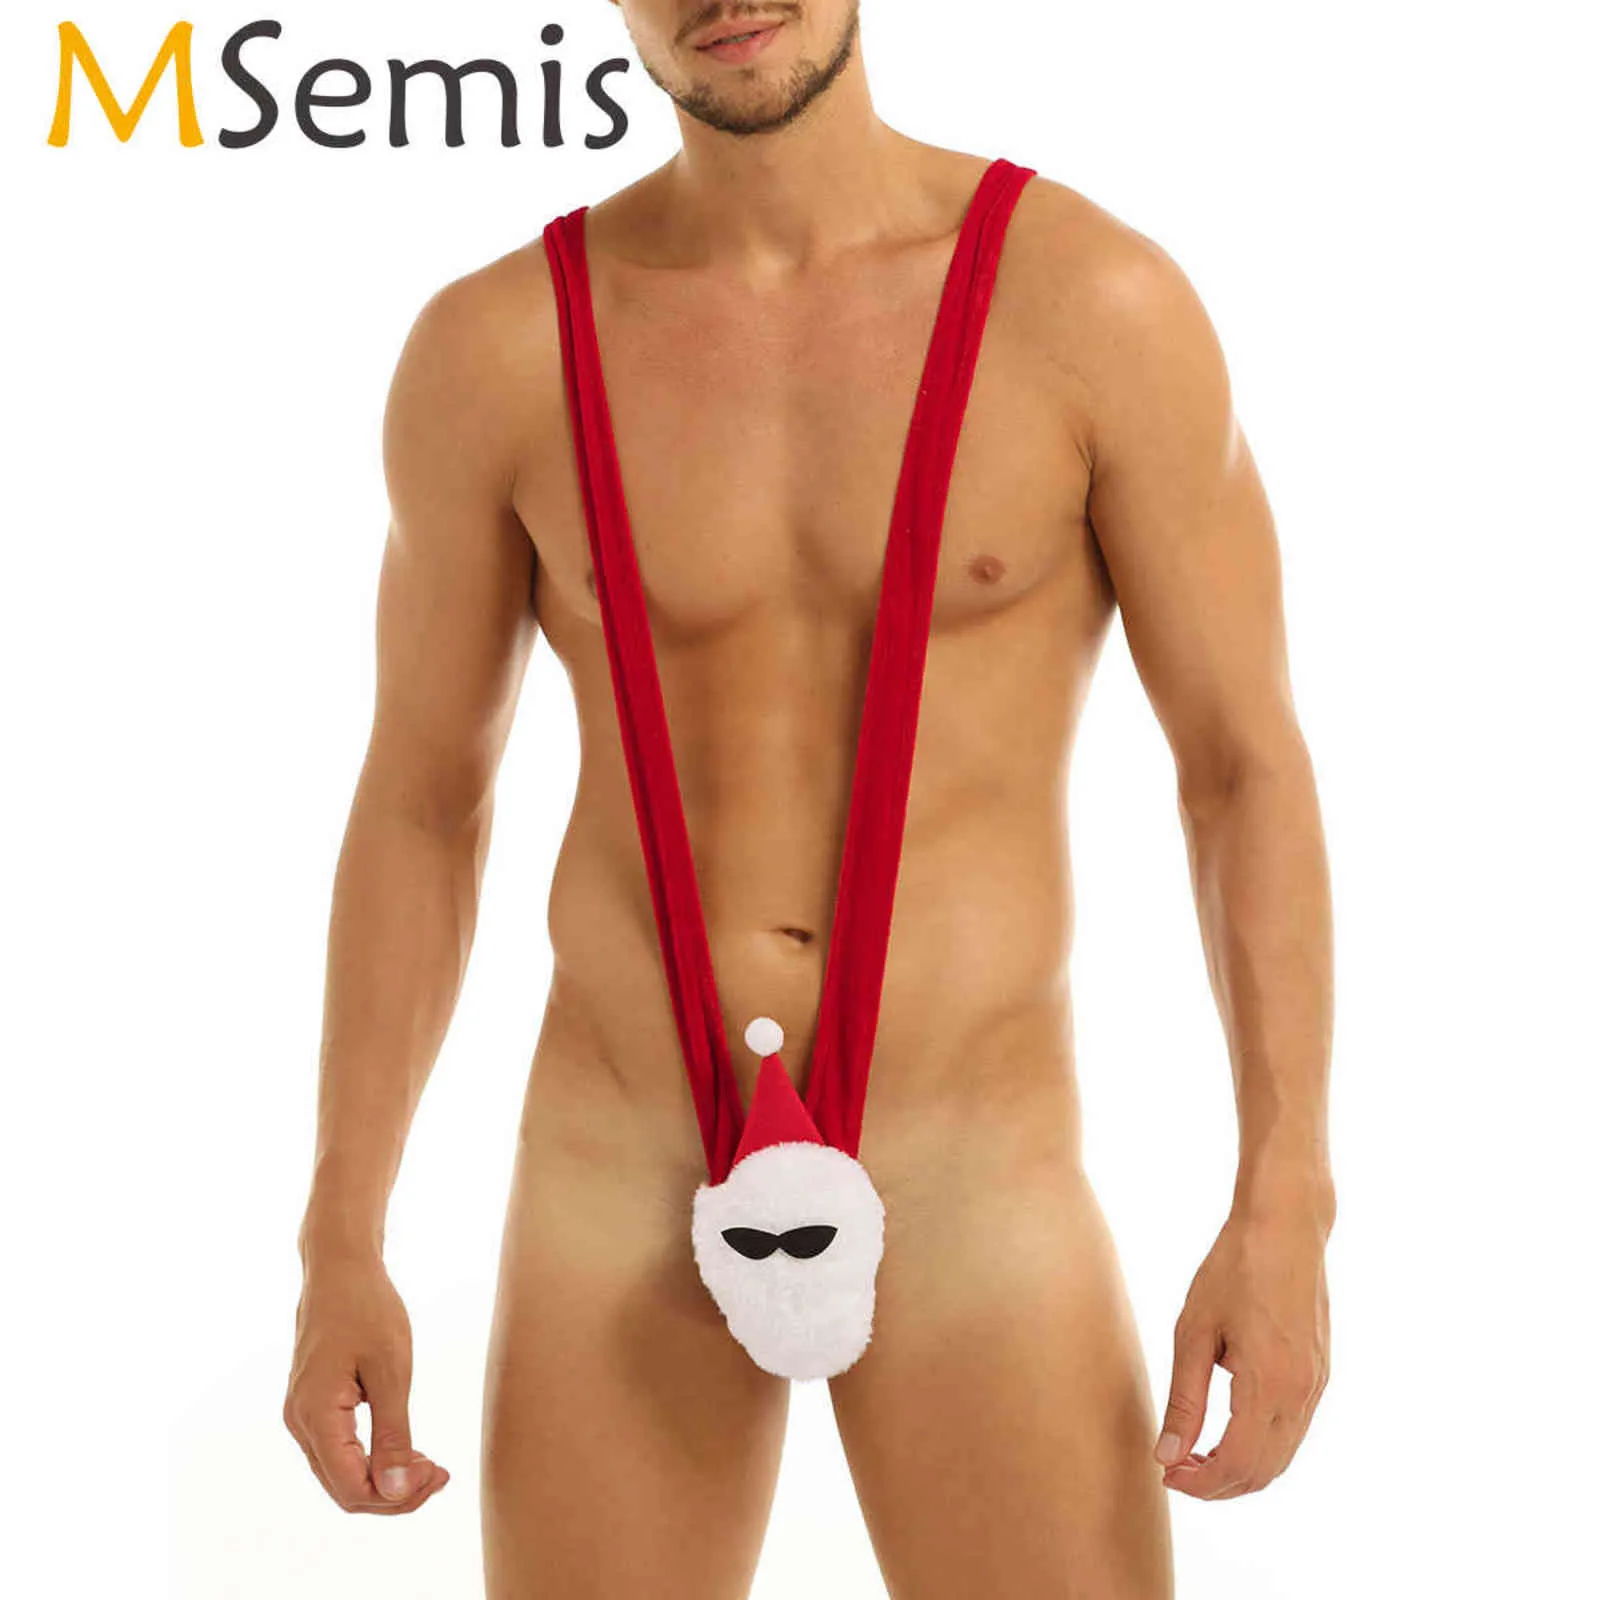 NXY Slip e Mutandine MSemis Mens Sexy Lingerie G String Velluto Costume di Natale Sissy Crotchless Gay Intimo Uomo Perizoma 1126